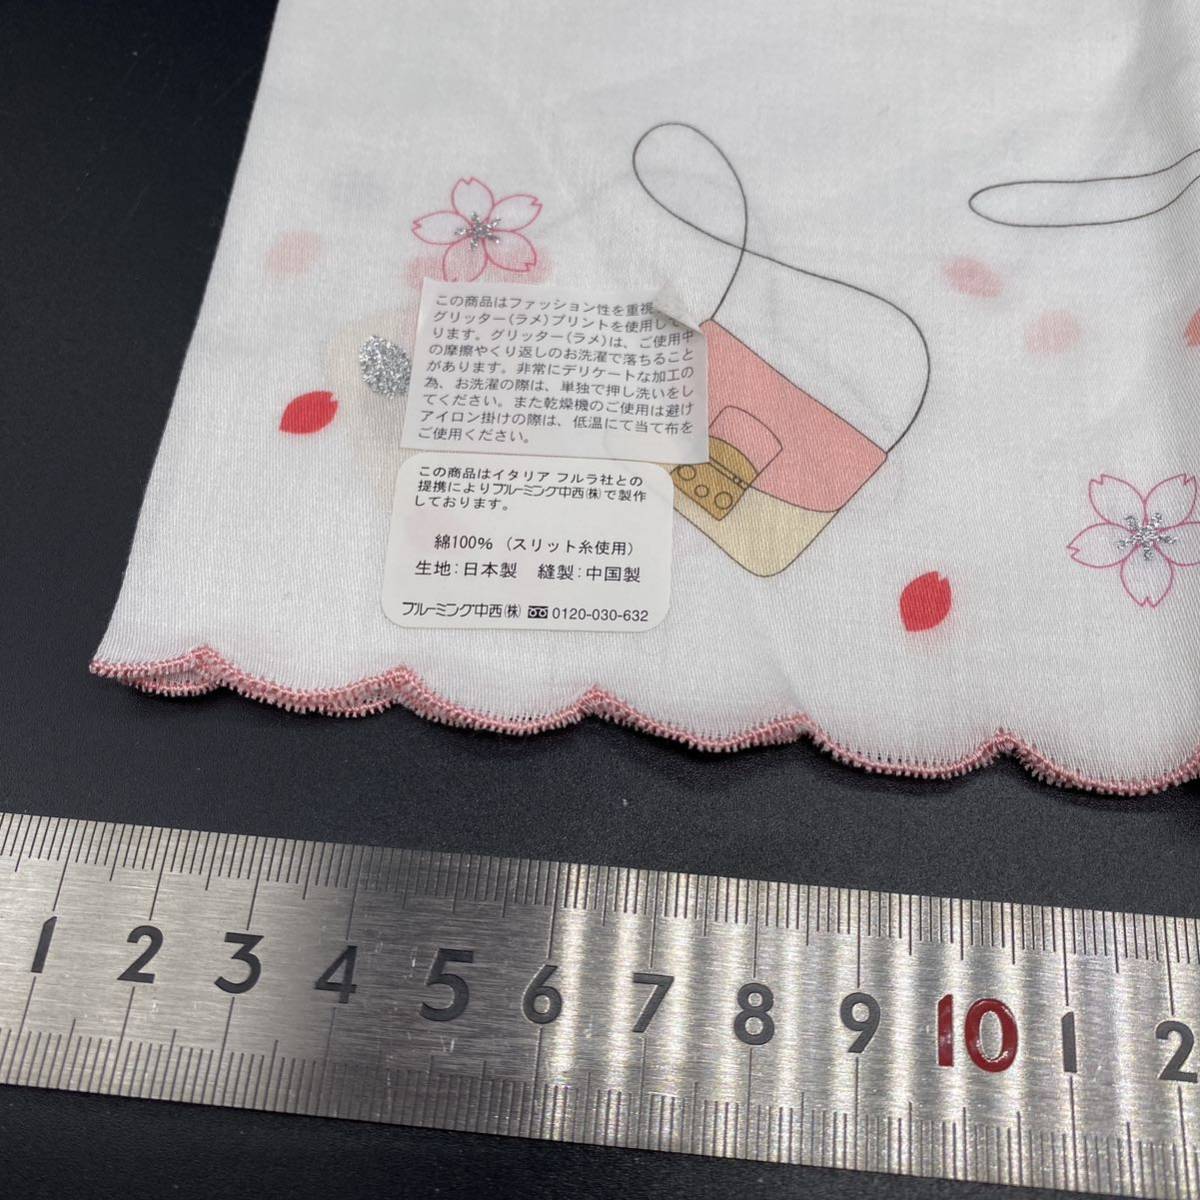 FURLA Furla handkerchie bag pattern white lame brink pink no.31